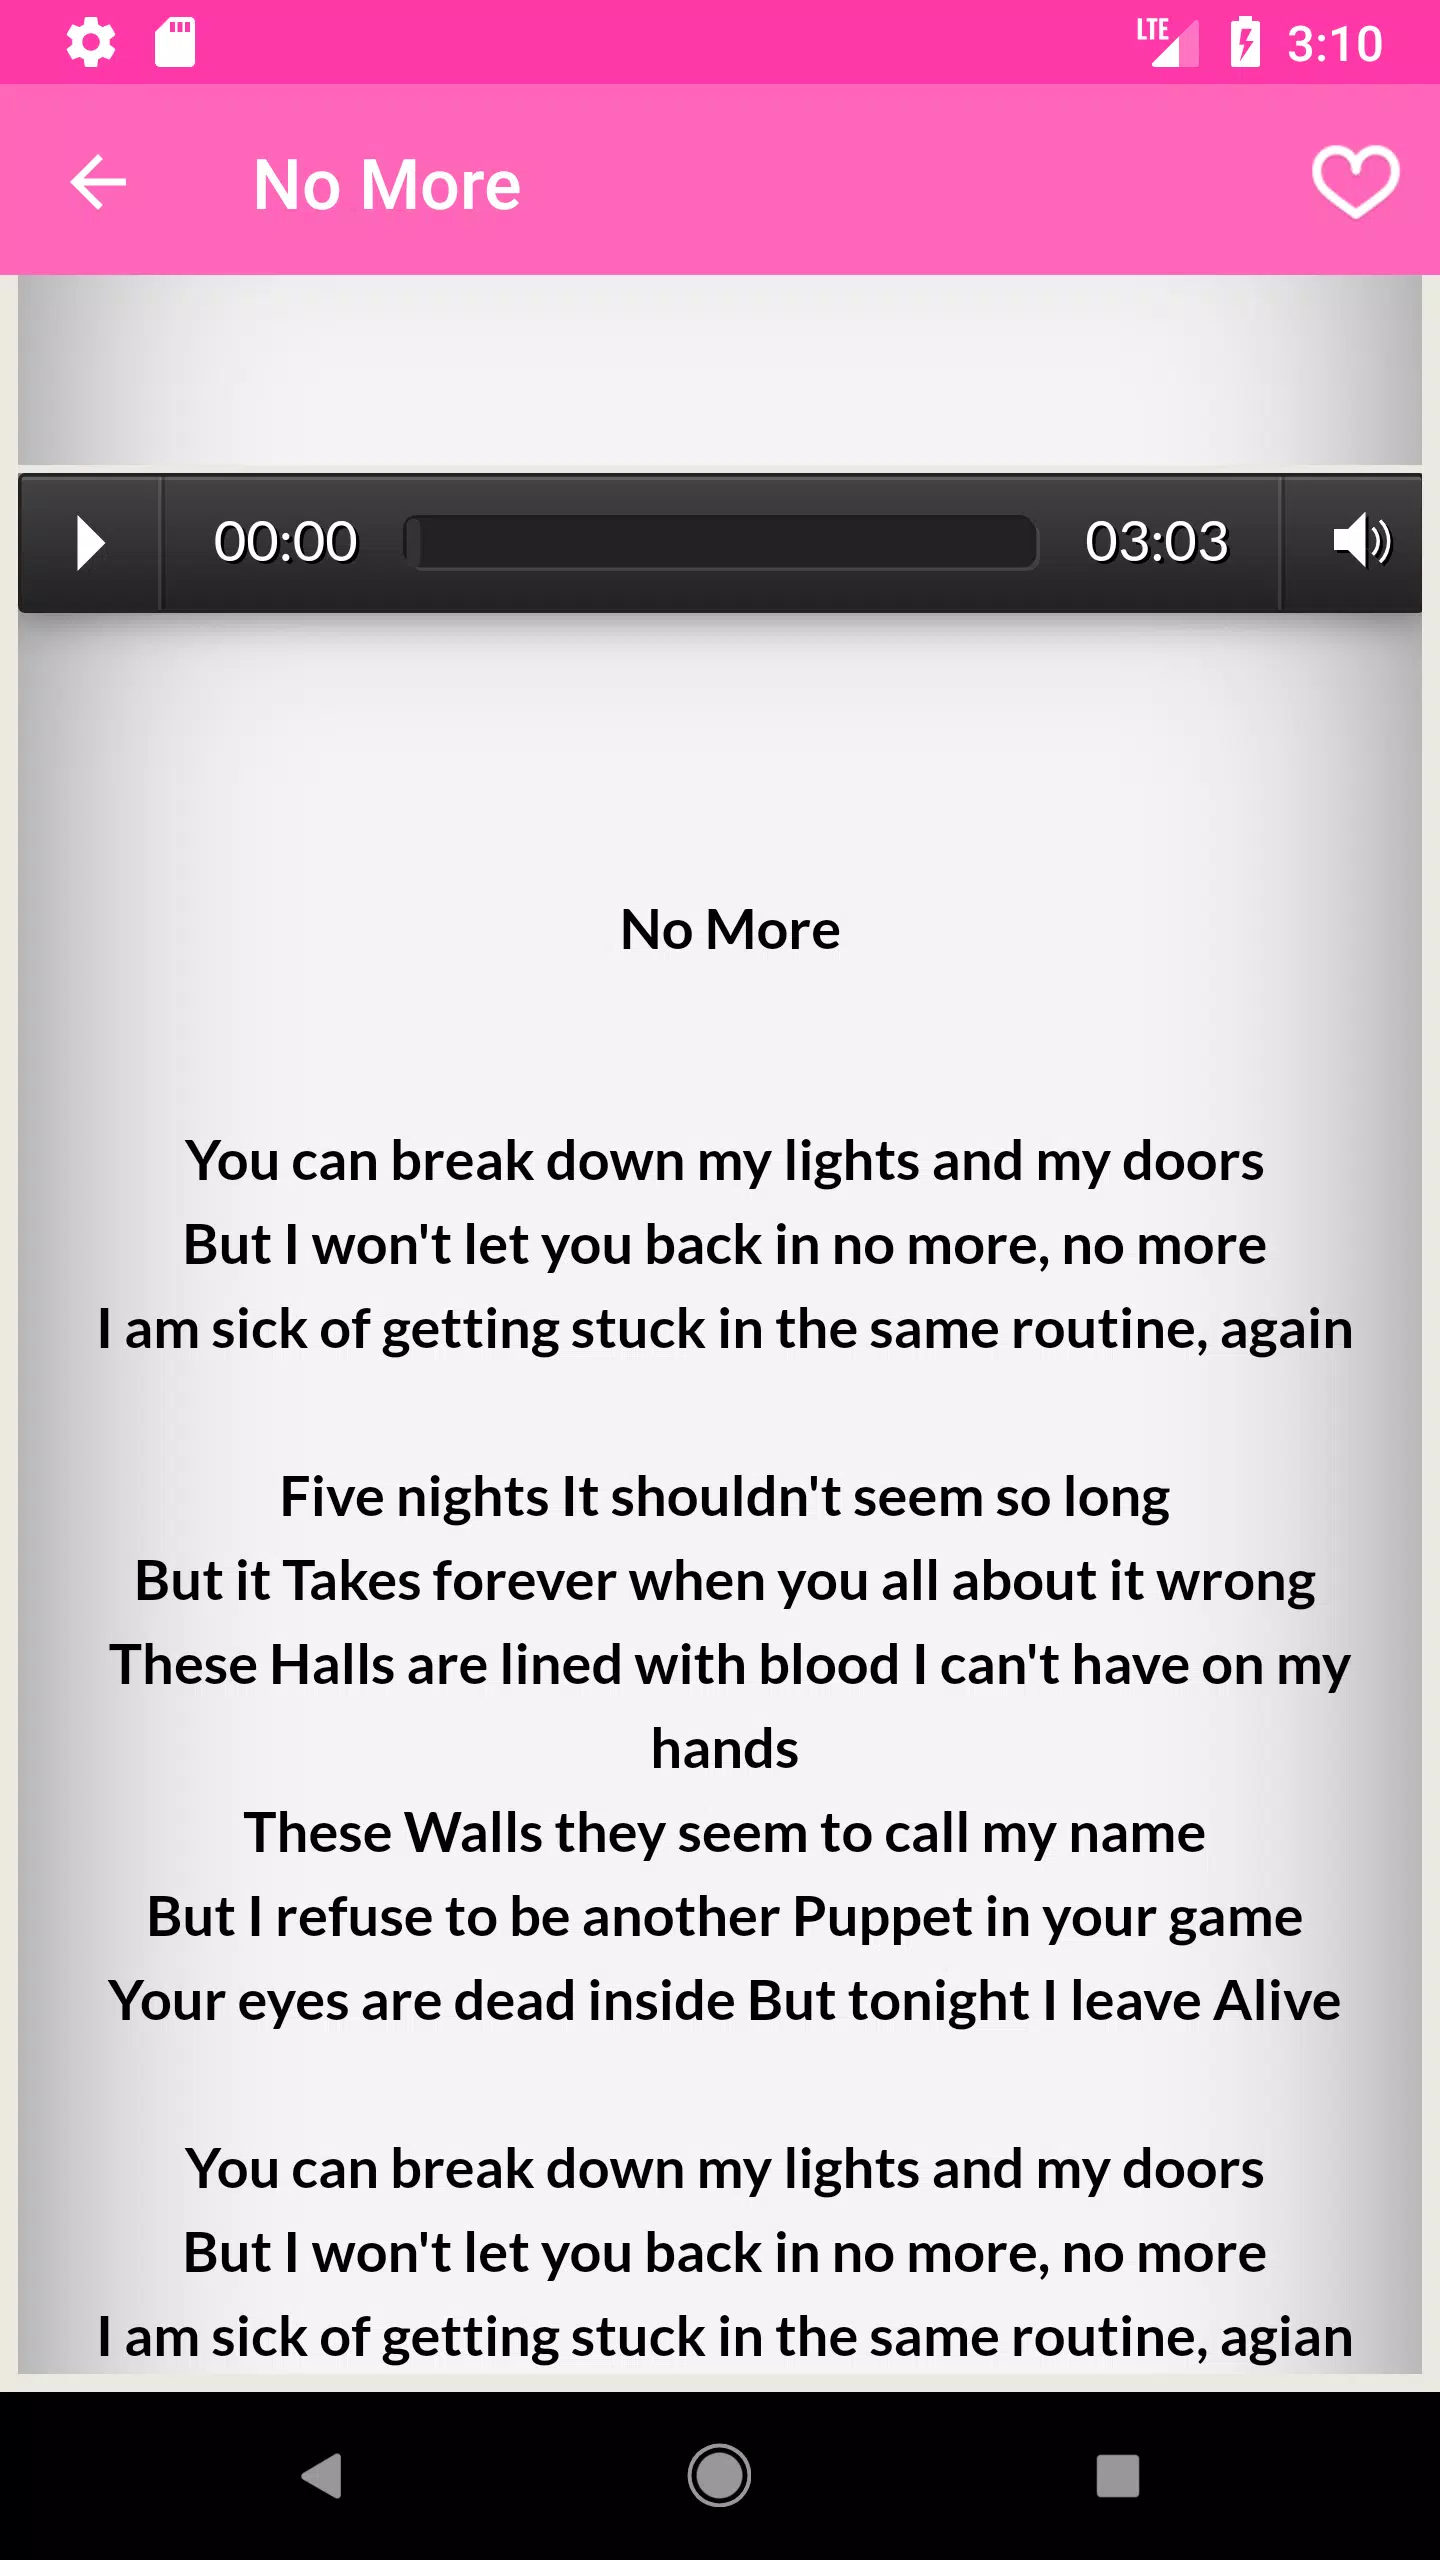 About: Lyrics FNAF 1 2 3 4 5 6 Songs Free (Google Play version